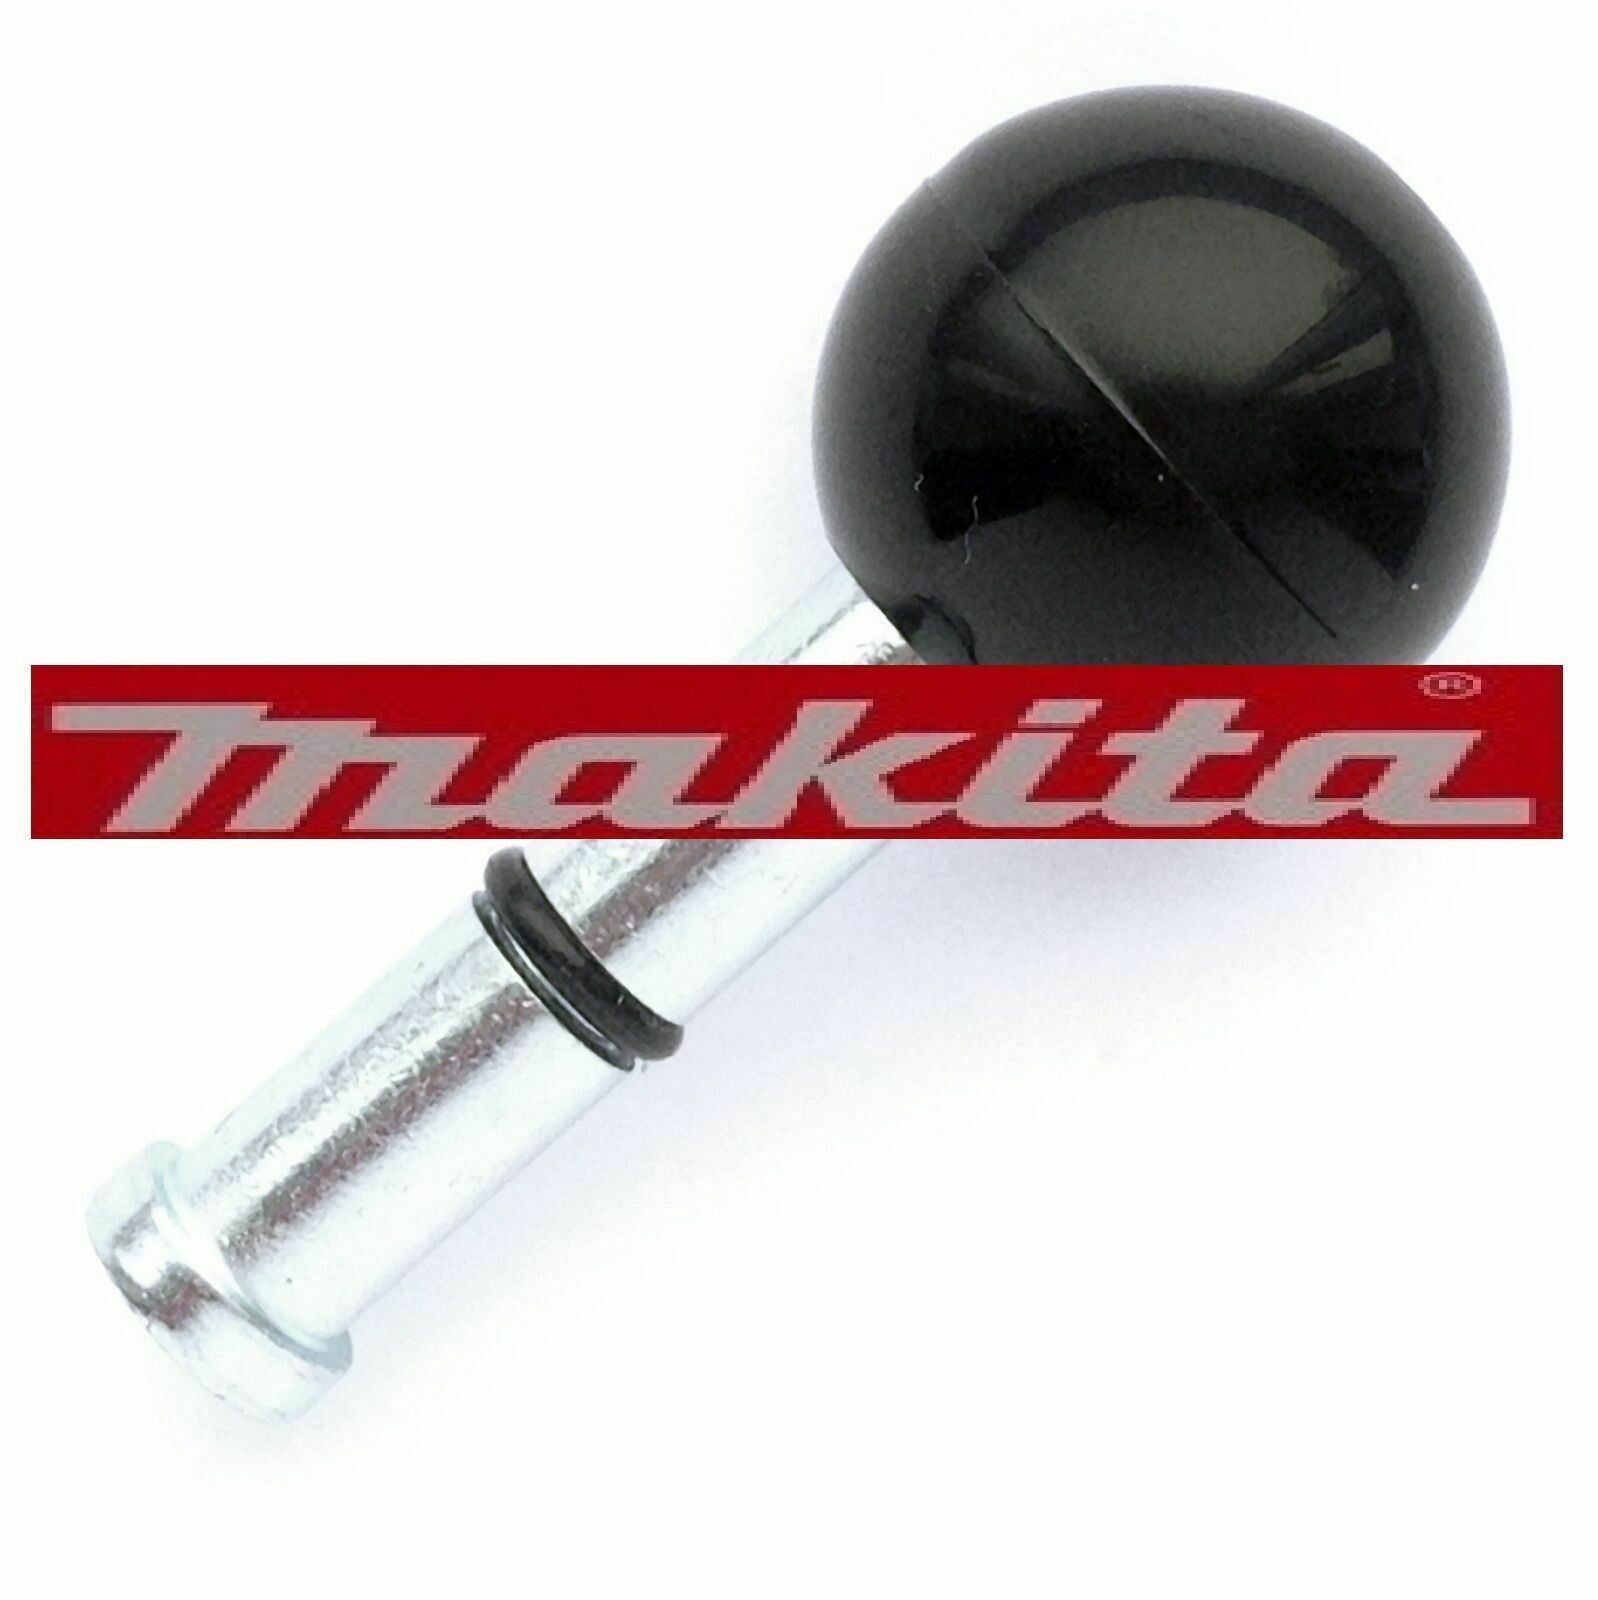 Makita 324183-5 Mitre Table Saw Stopper Stop Pin Lock Bolt  O-Ring Knob LS1016L - $17.86